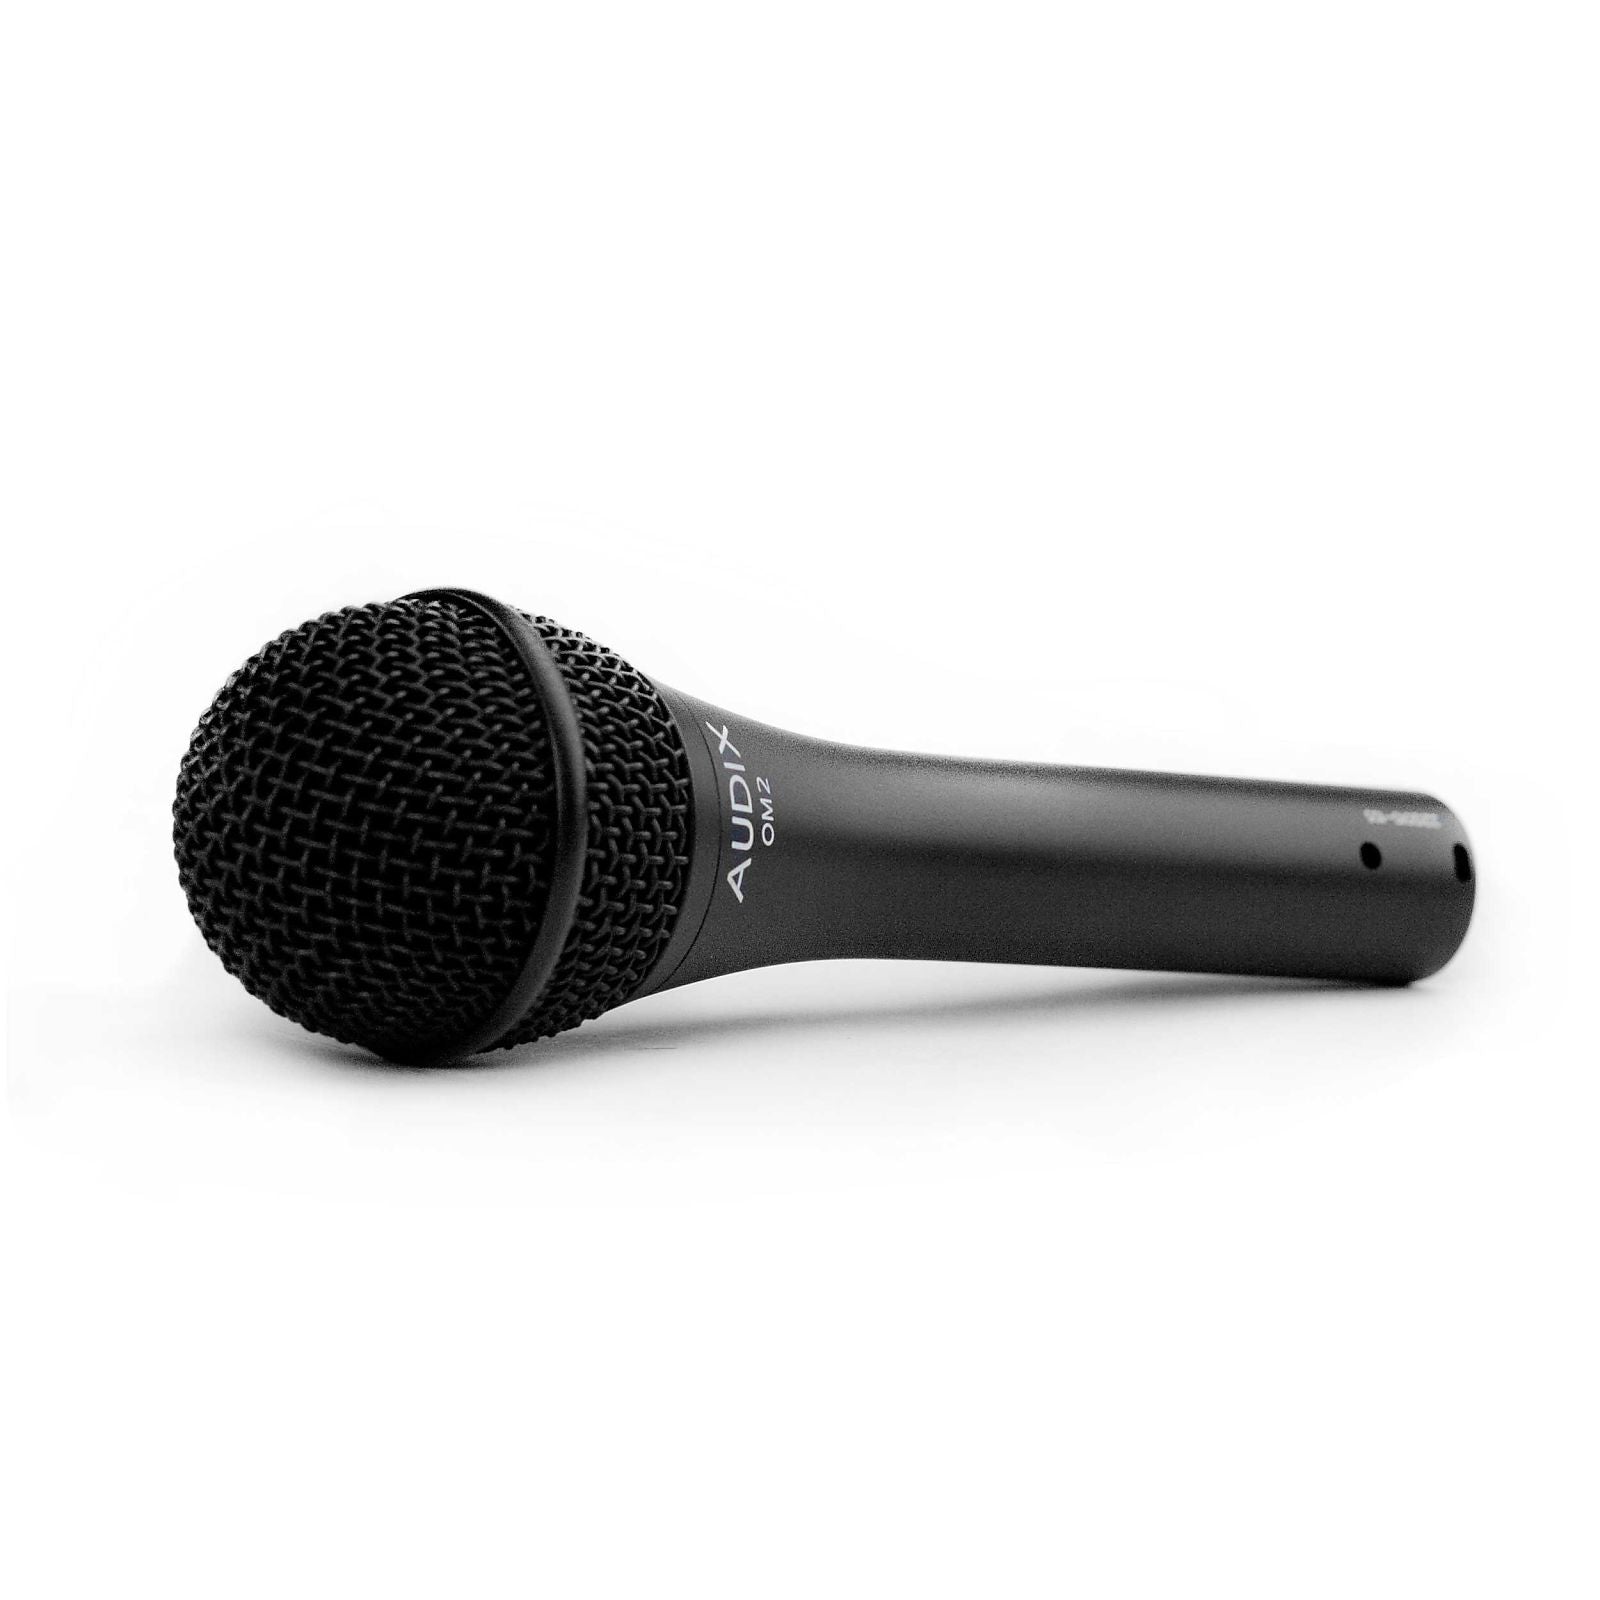 Audix OM2 Dynamic Cardioid Microphone